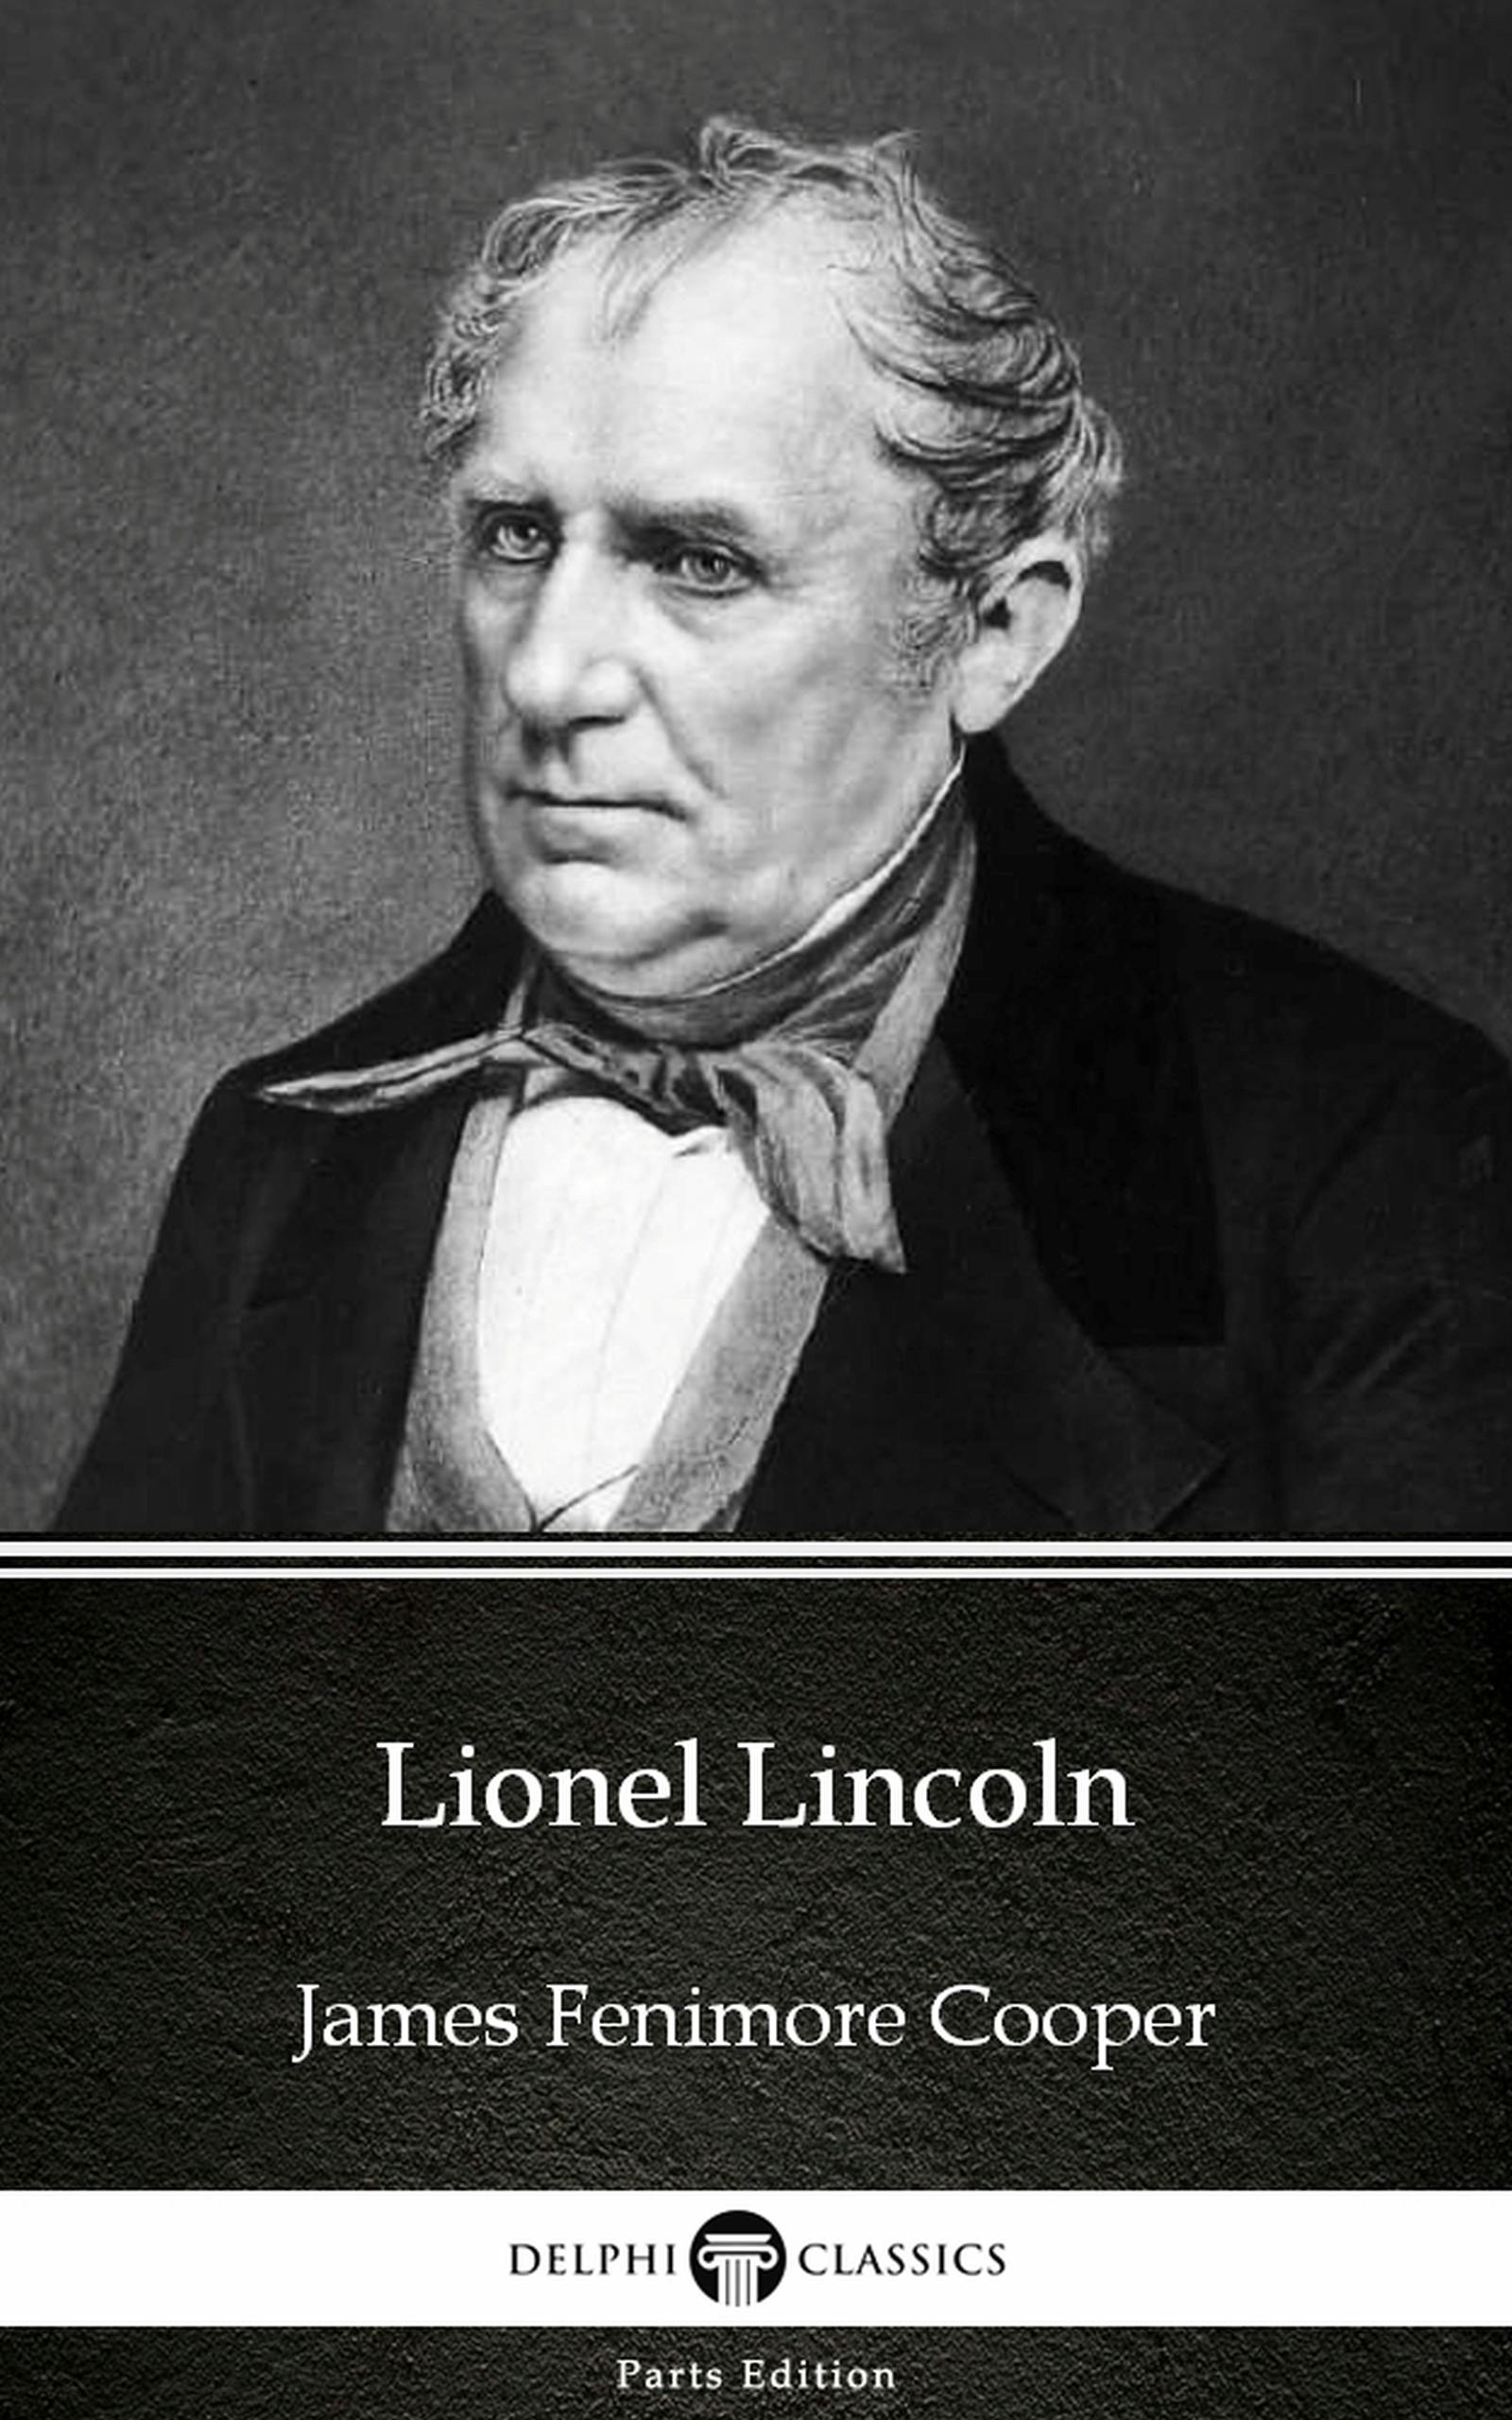 Lionel Lincoln by James Fenimore Cooper - Delphi Classics (Illustrated) - James Fenimore Cooper